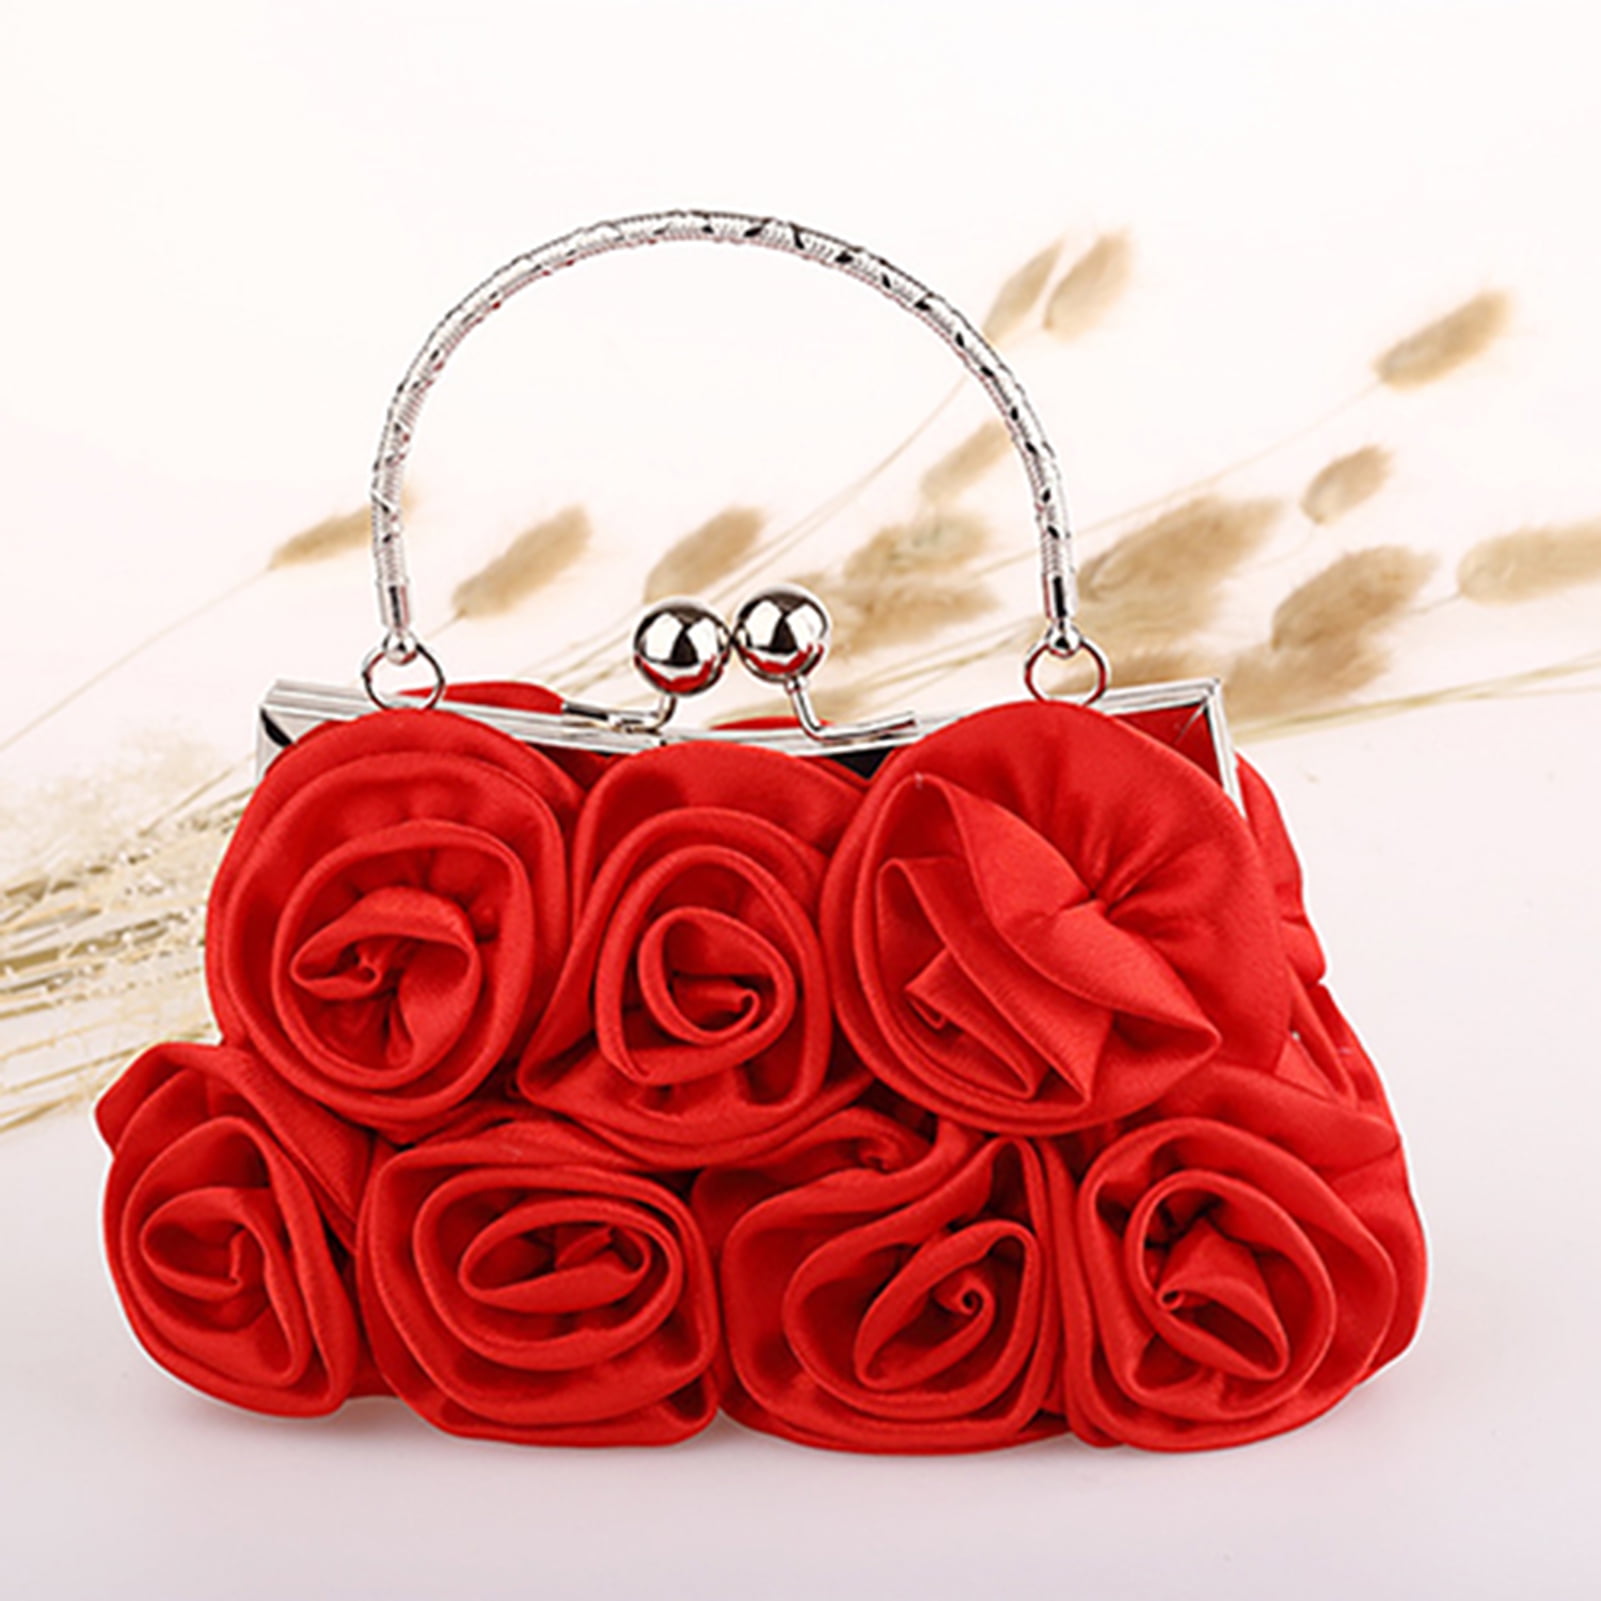 Silk Clutches Handbags - Buy Silk Clutches Handbags online in India